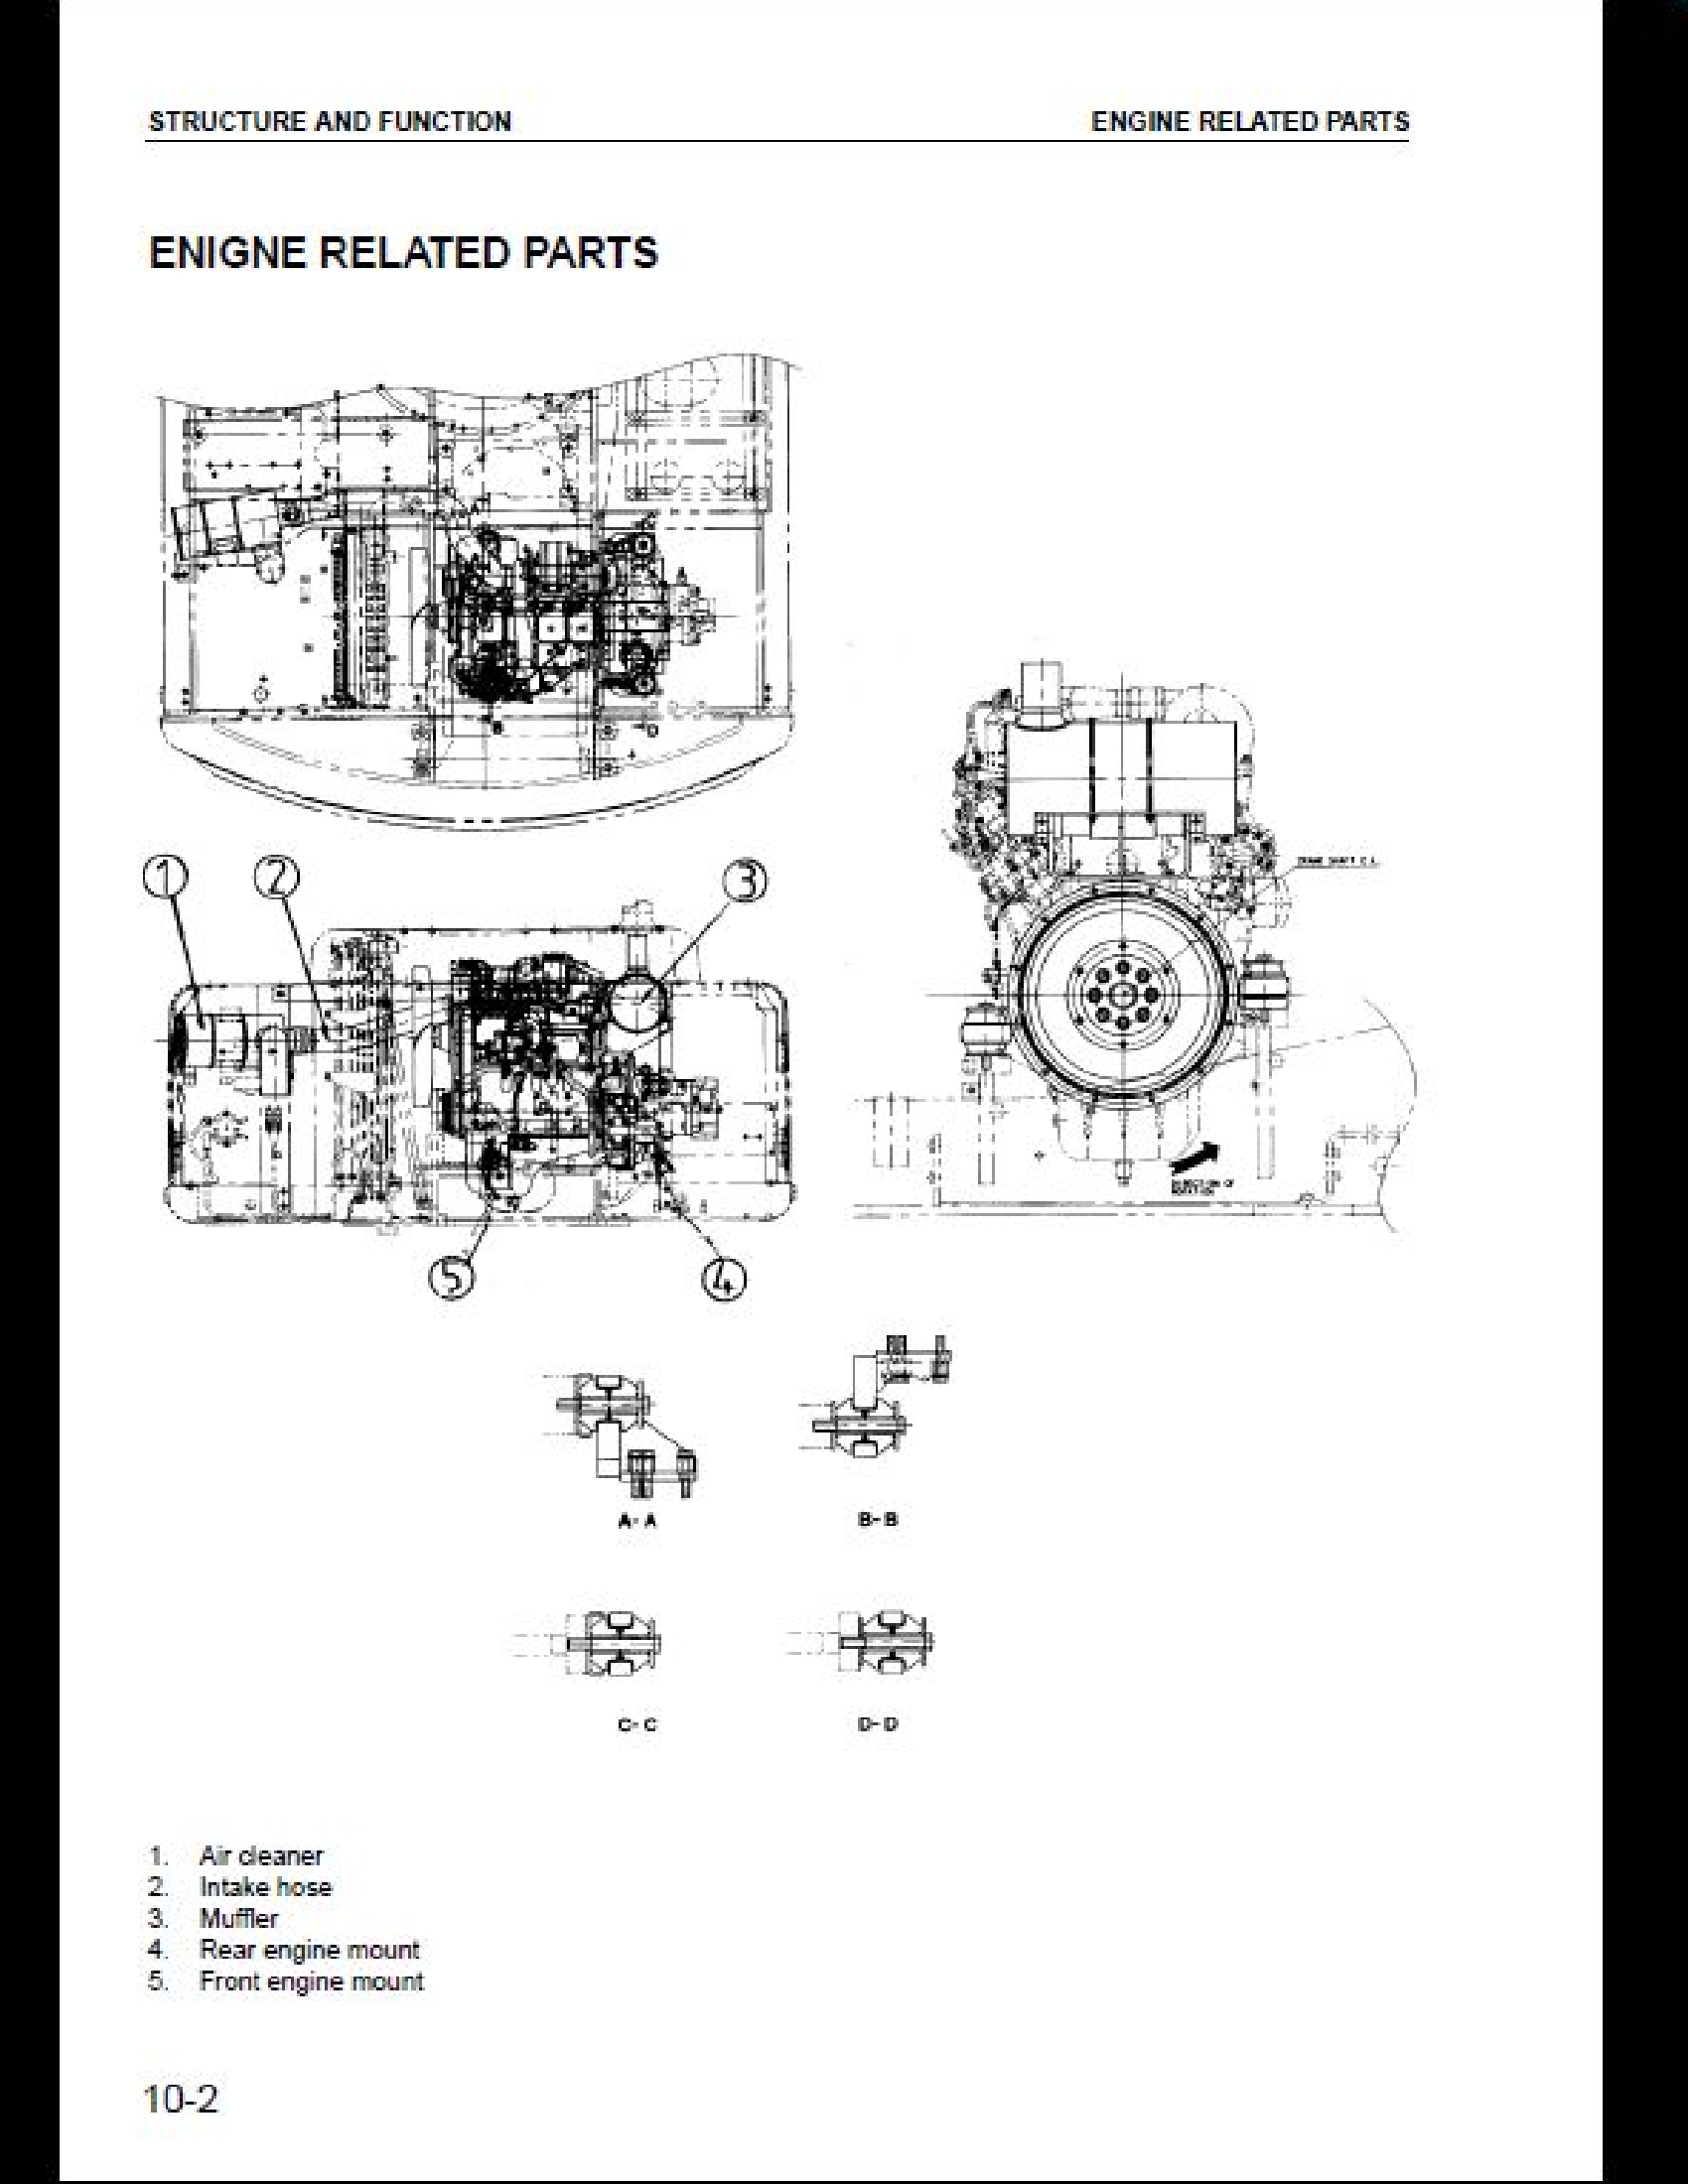 KOMATSU PW130ES-6K Hydraulic Excavator manual